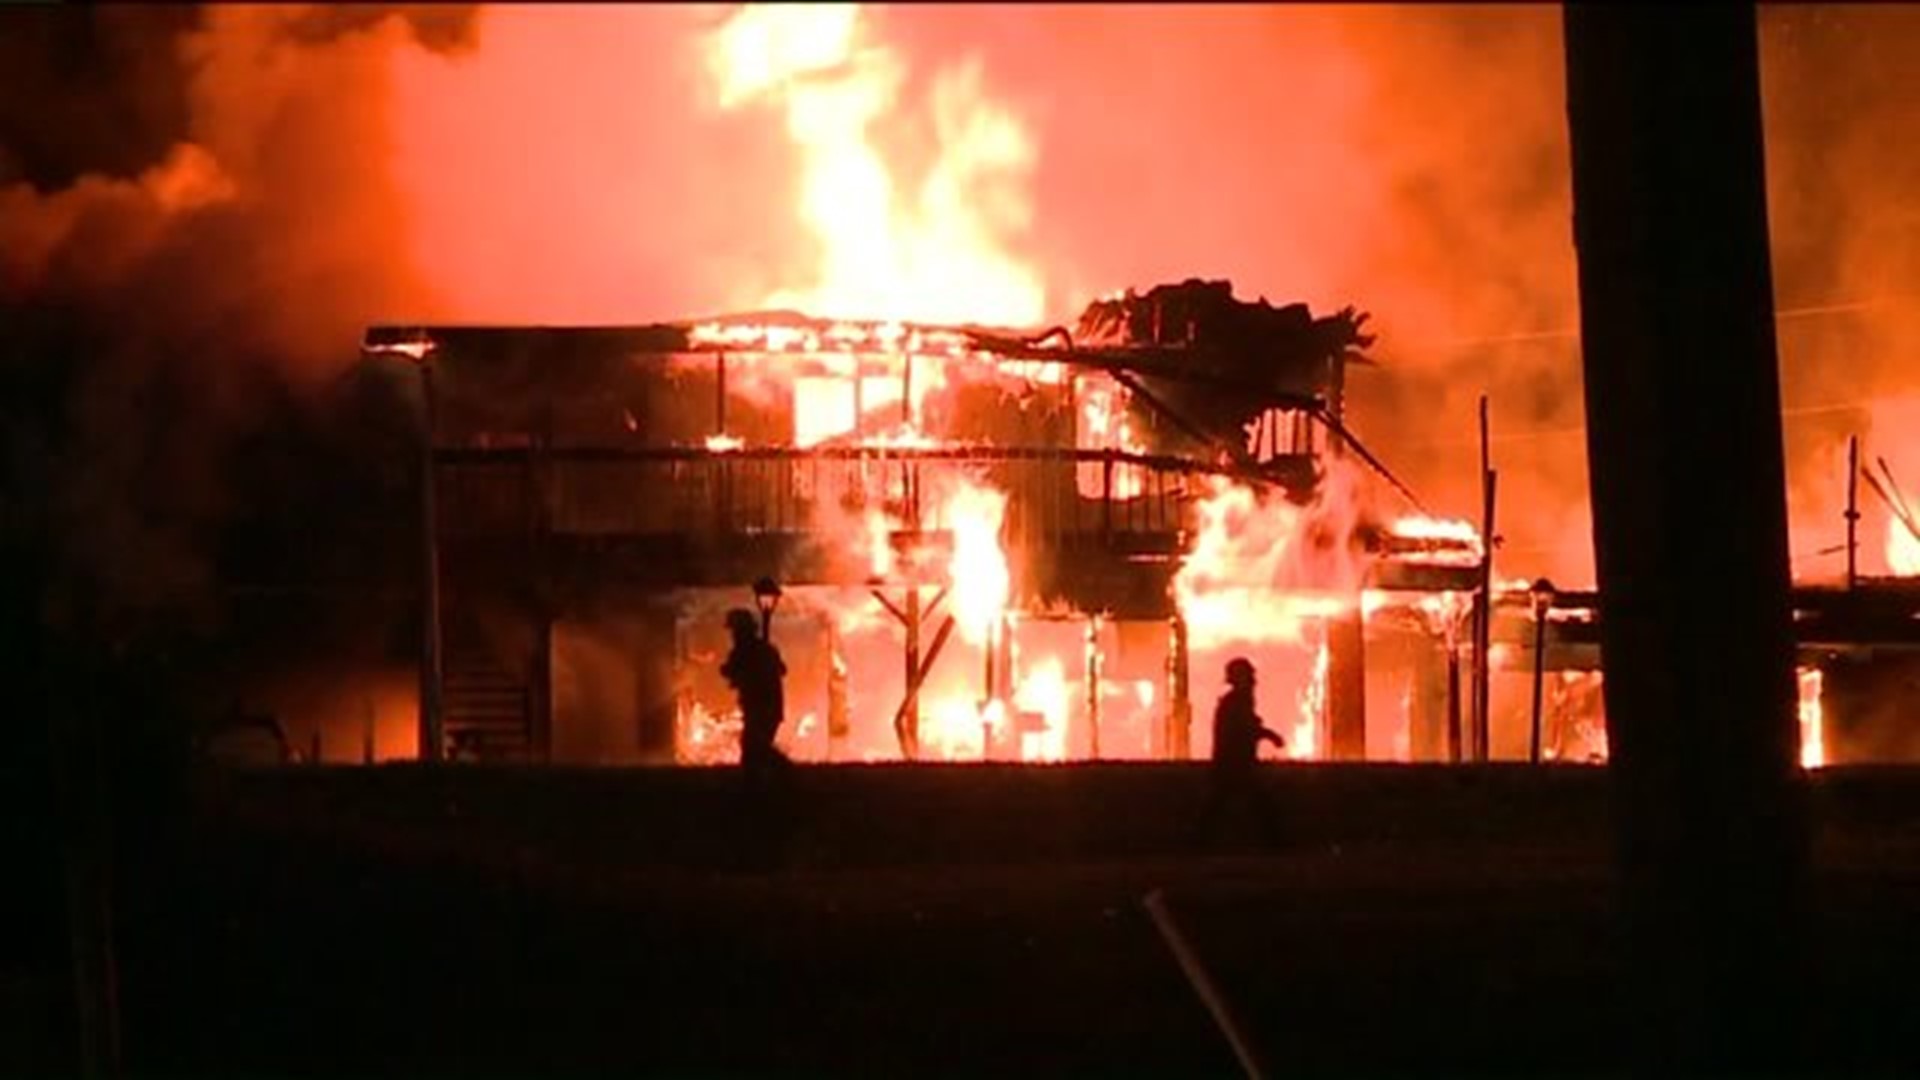 About Two Dozen Flee Inn During Blaze